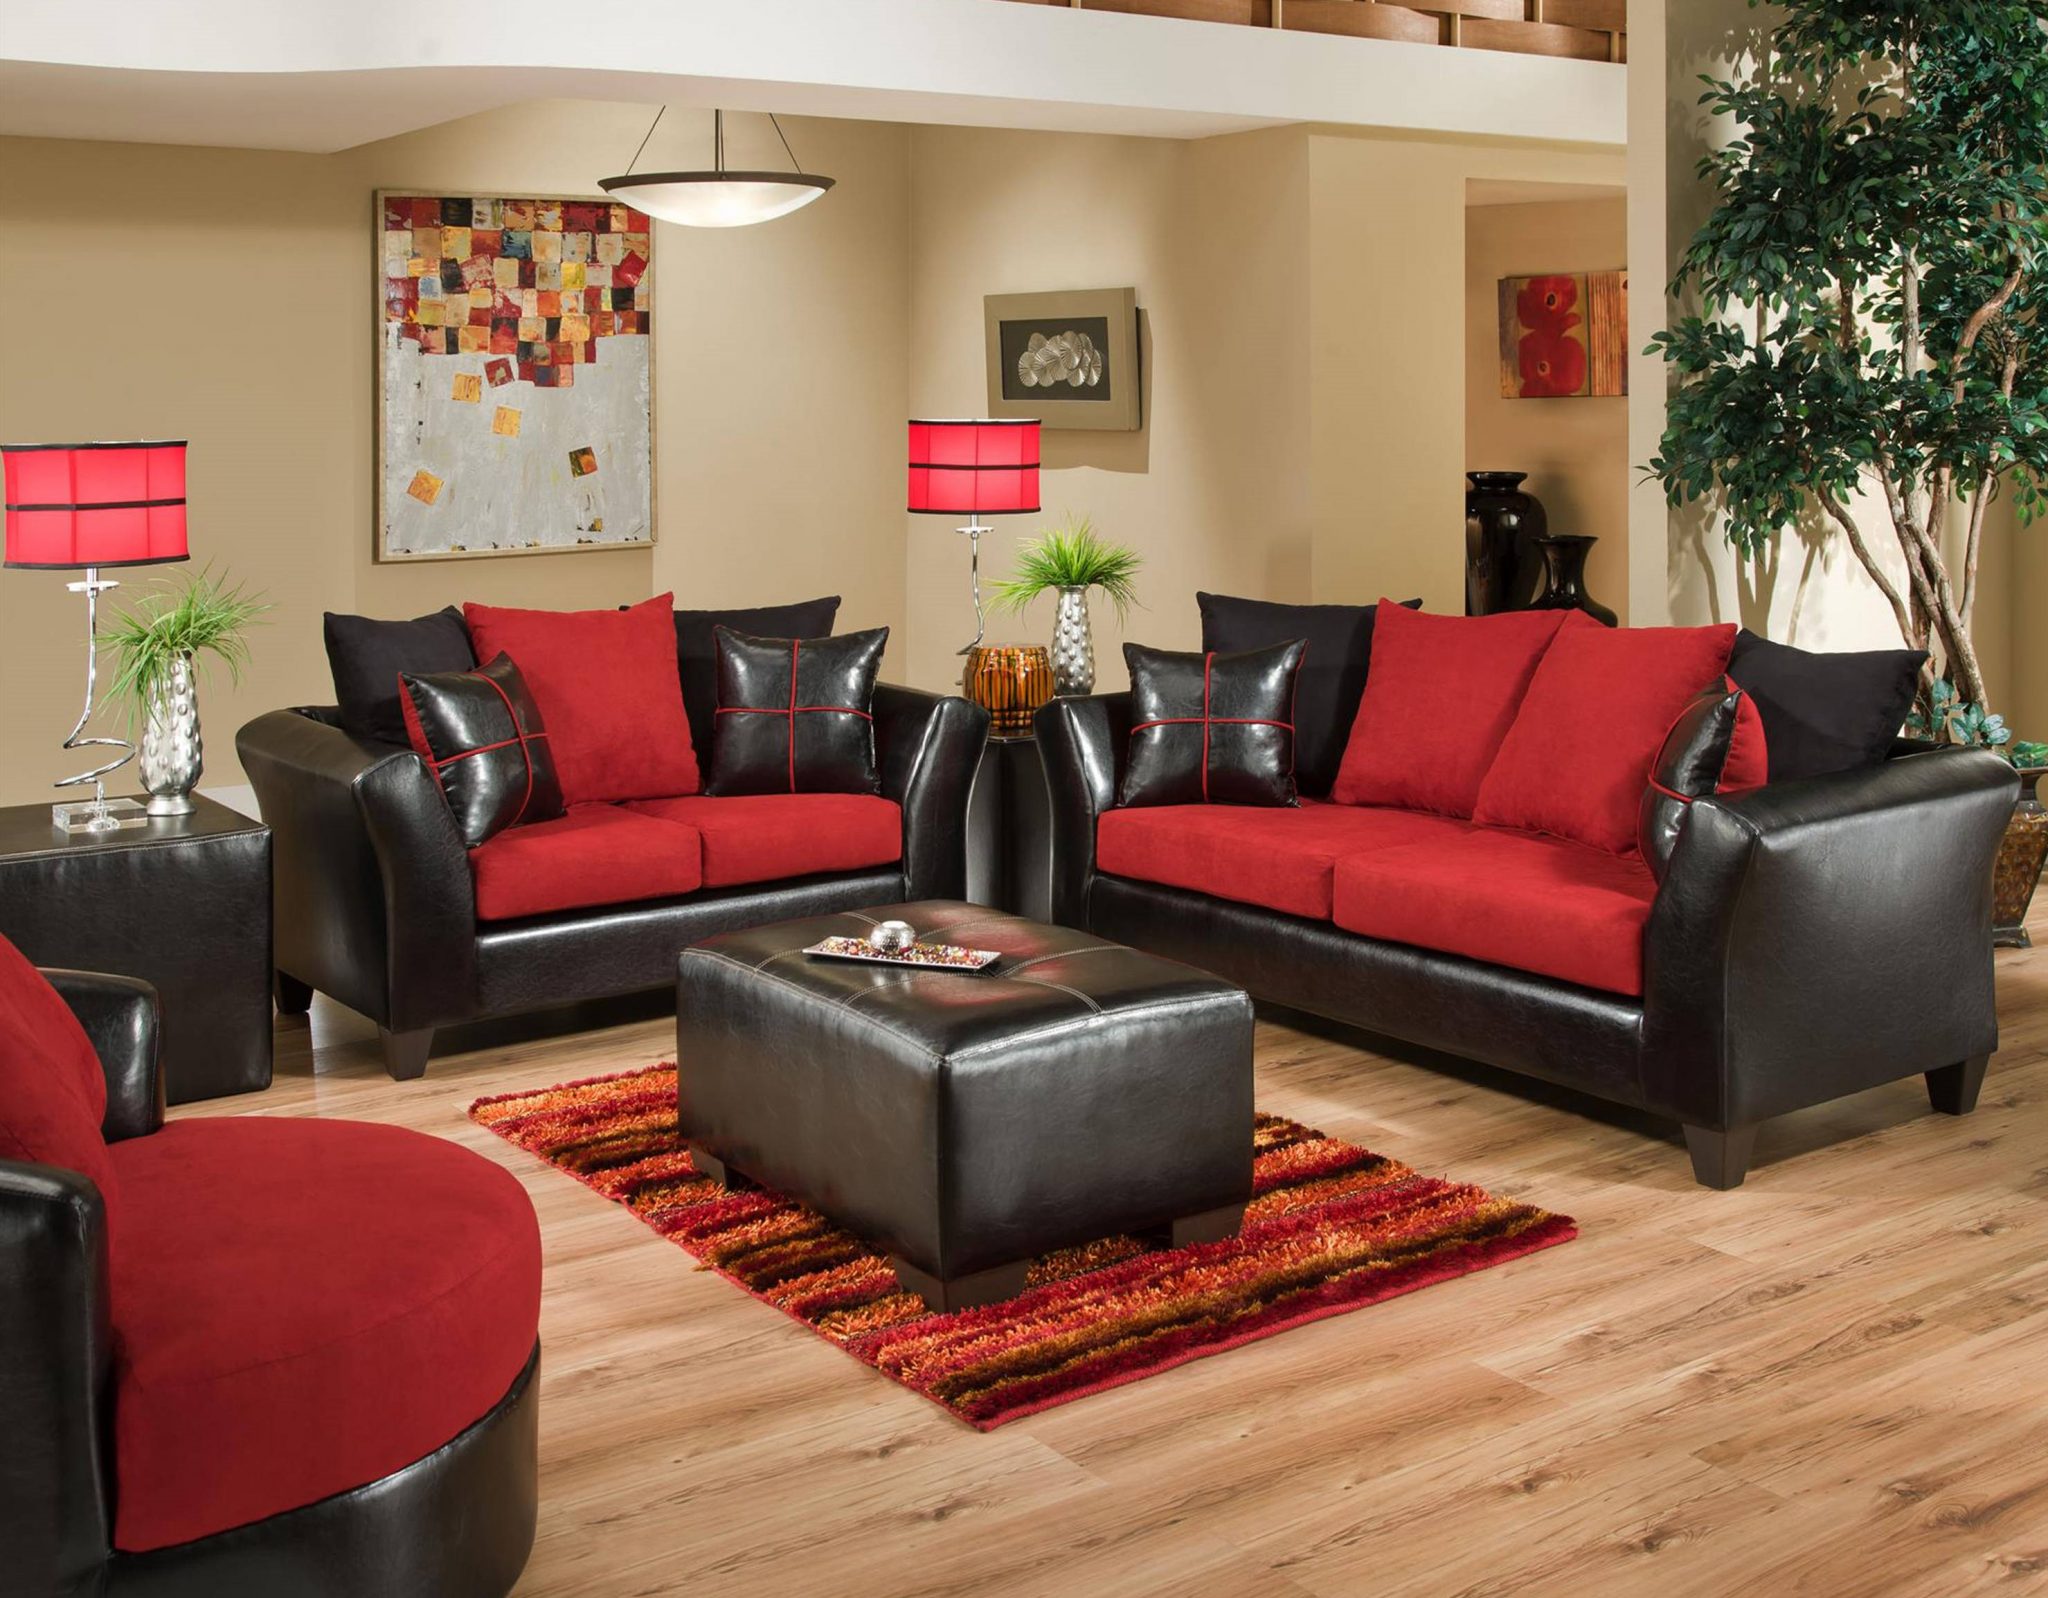 Elegant red and black living room